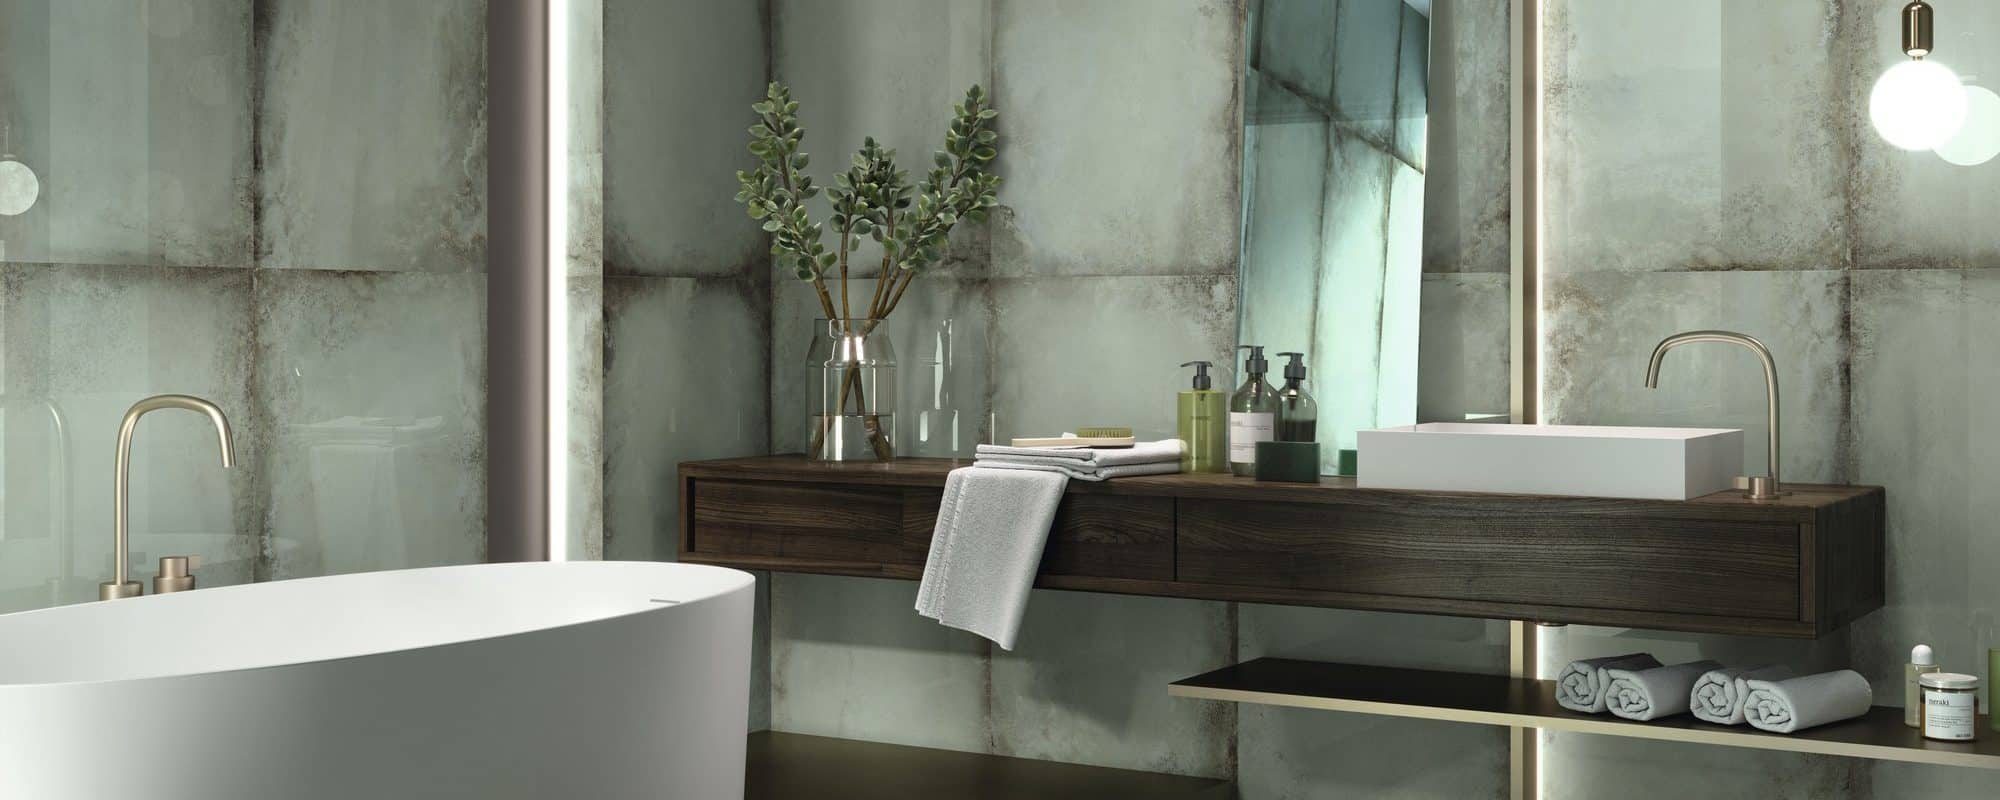 NAXOS cement effect porcelain bathroom tiles uk slider 4